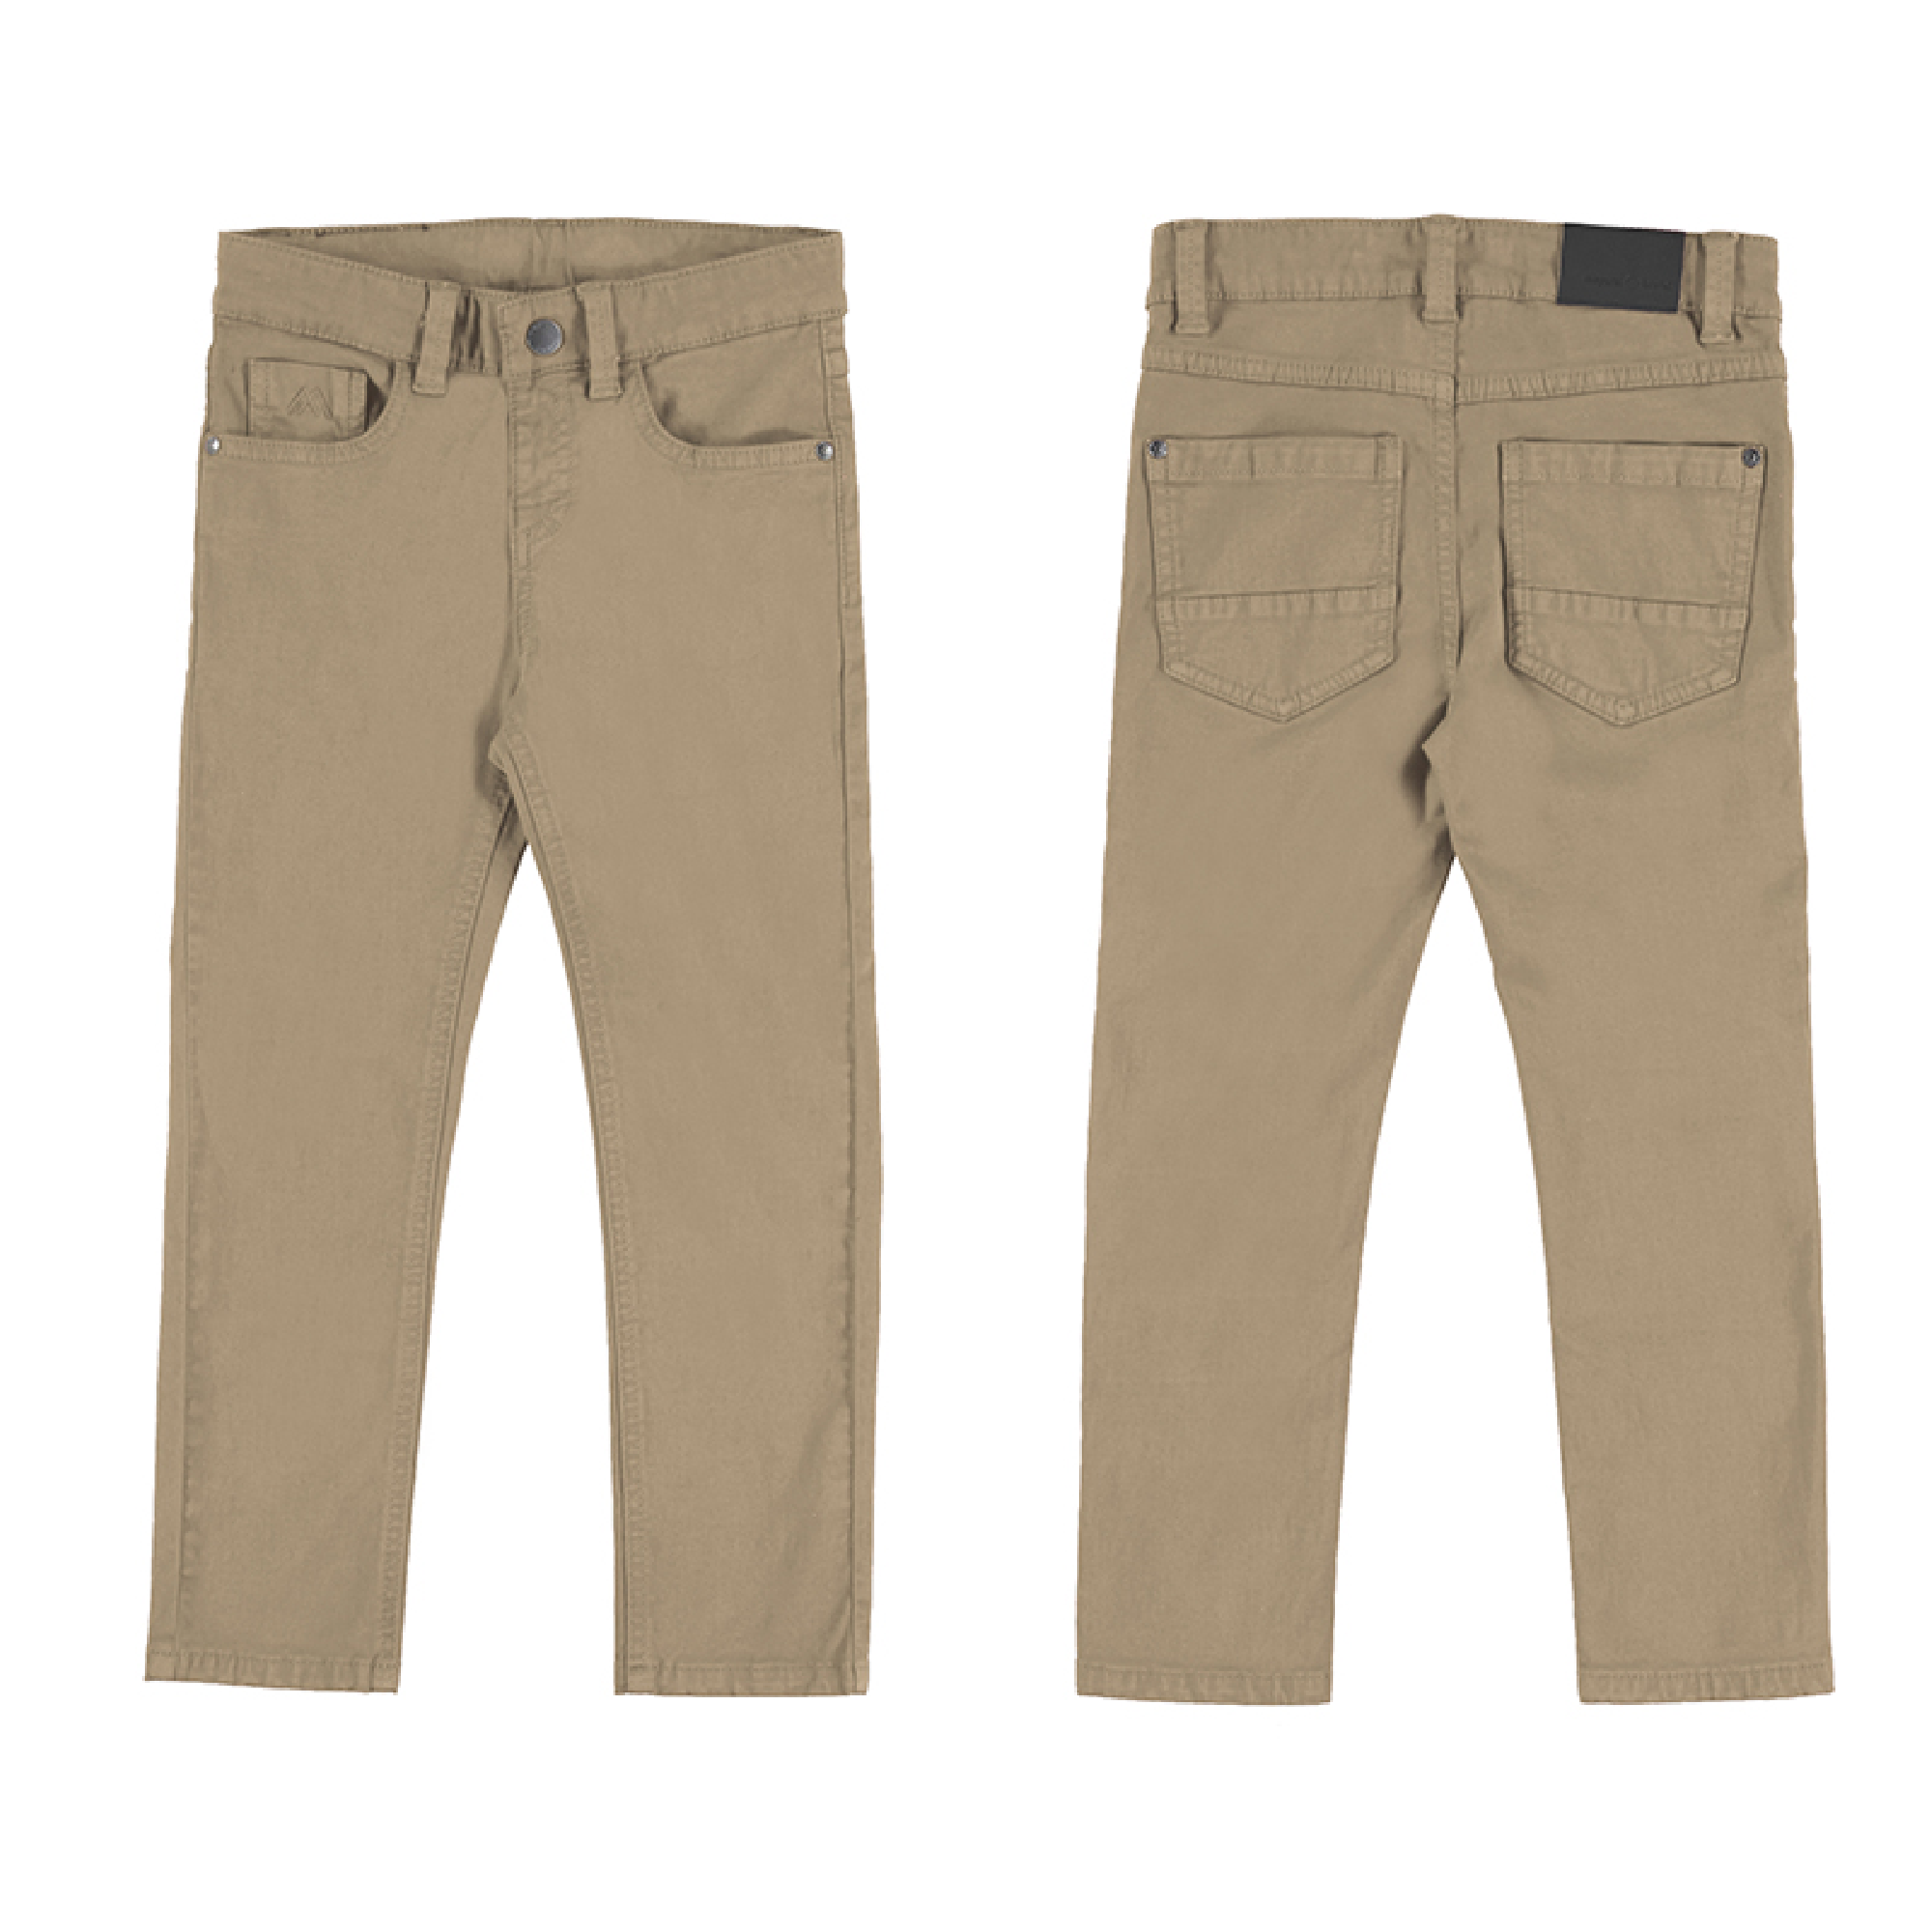 jongens 5 Pocket Slim Fit Basic Pant van Mayoral in de kleur Bruin in maat 128.